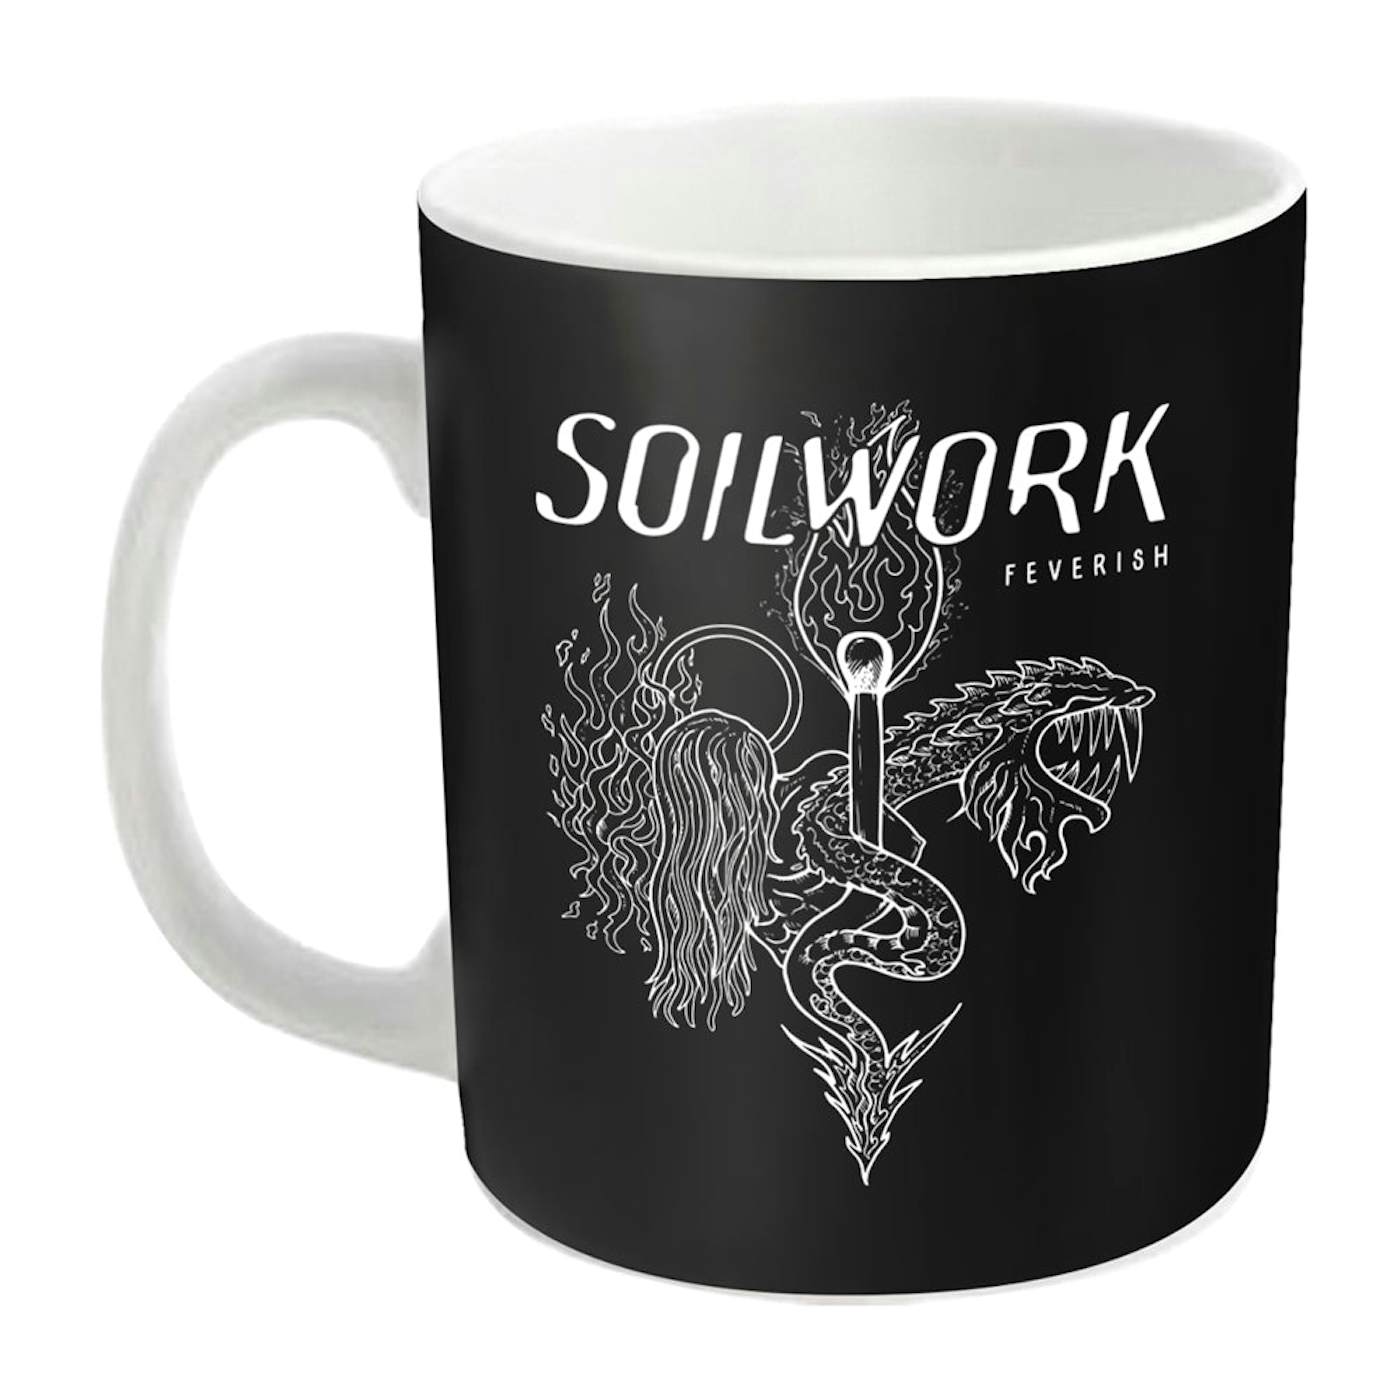 Soilwork Mug - Feverish